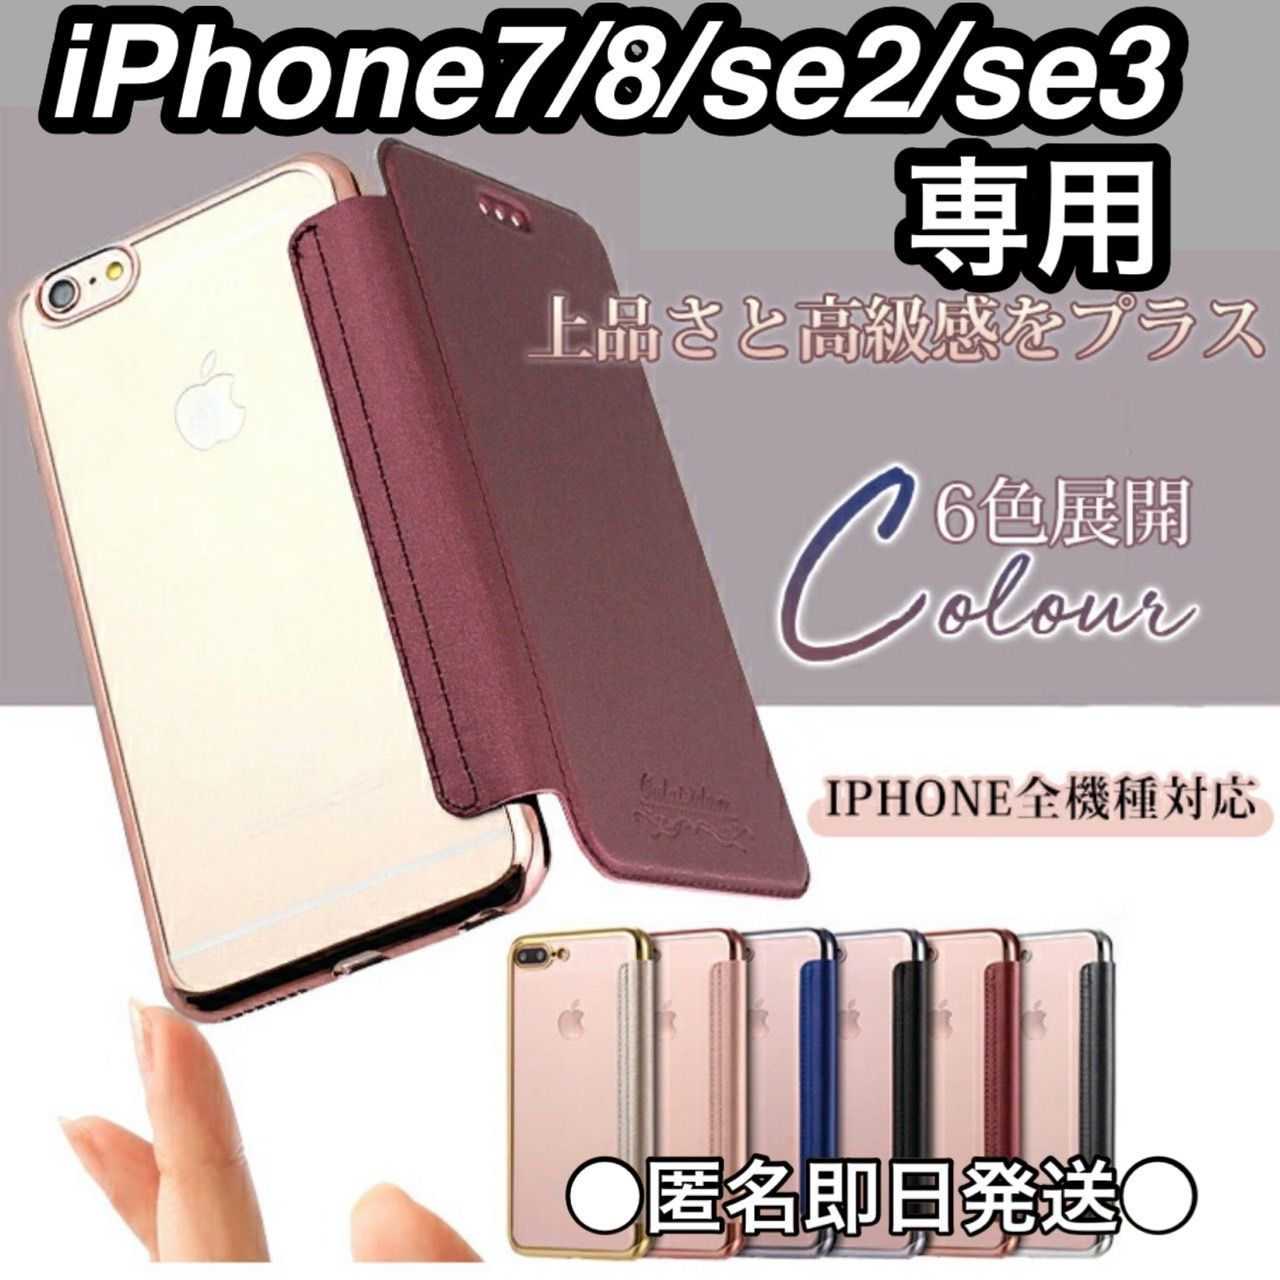 7.8.SE2/3専用》⭐️即日発送⭐️ 背面クリア手帳型iPhoneケース - mm